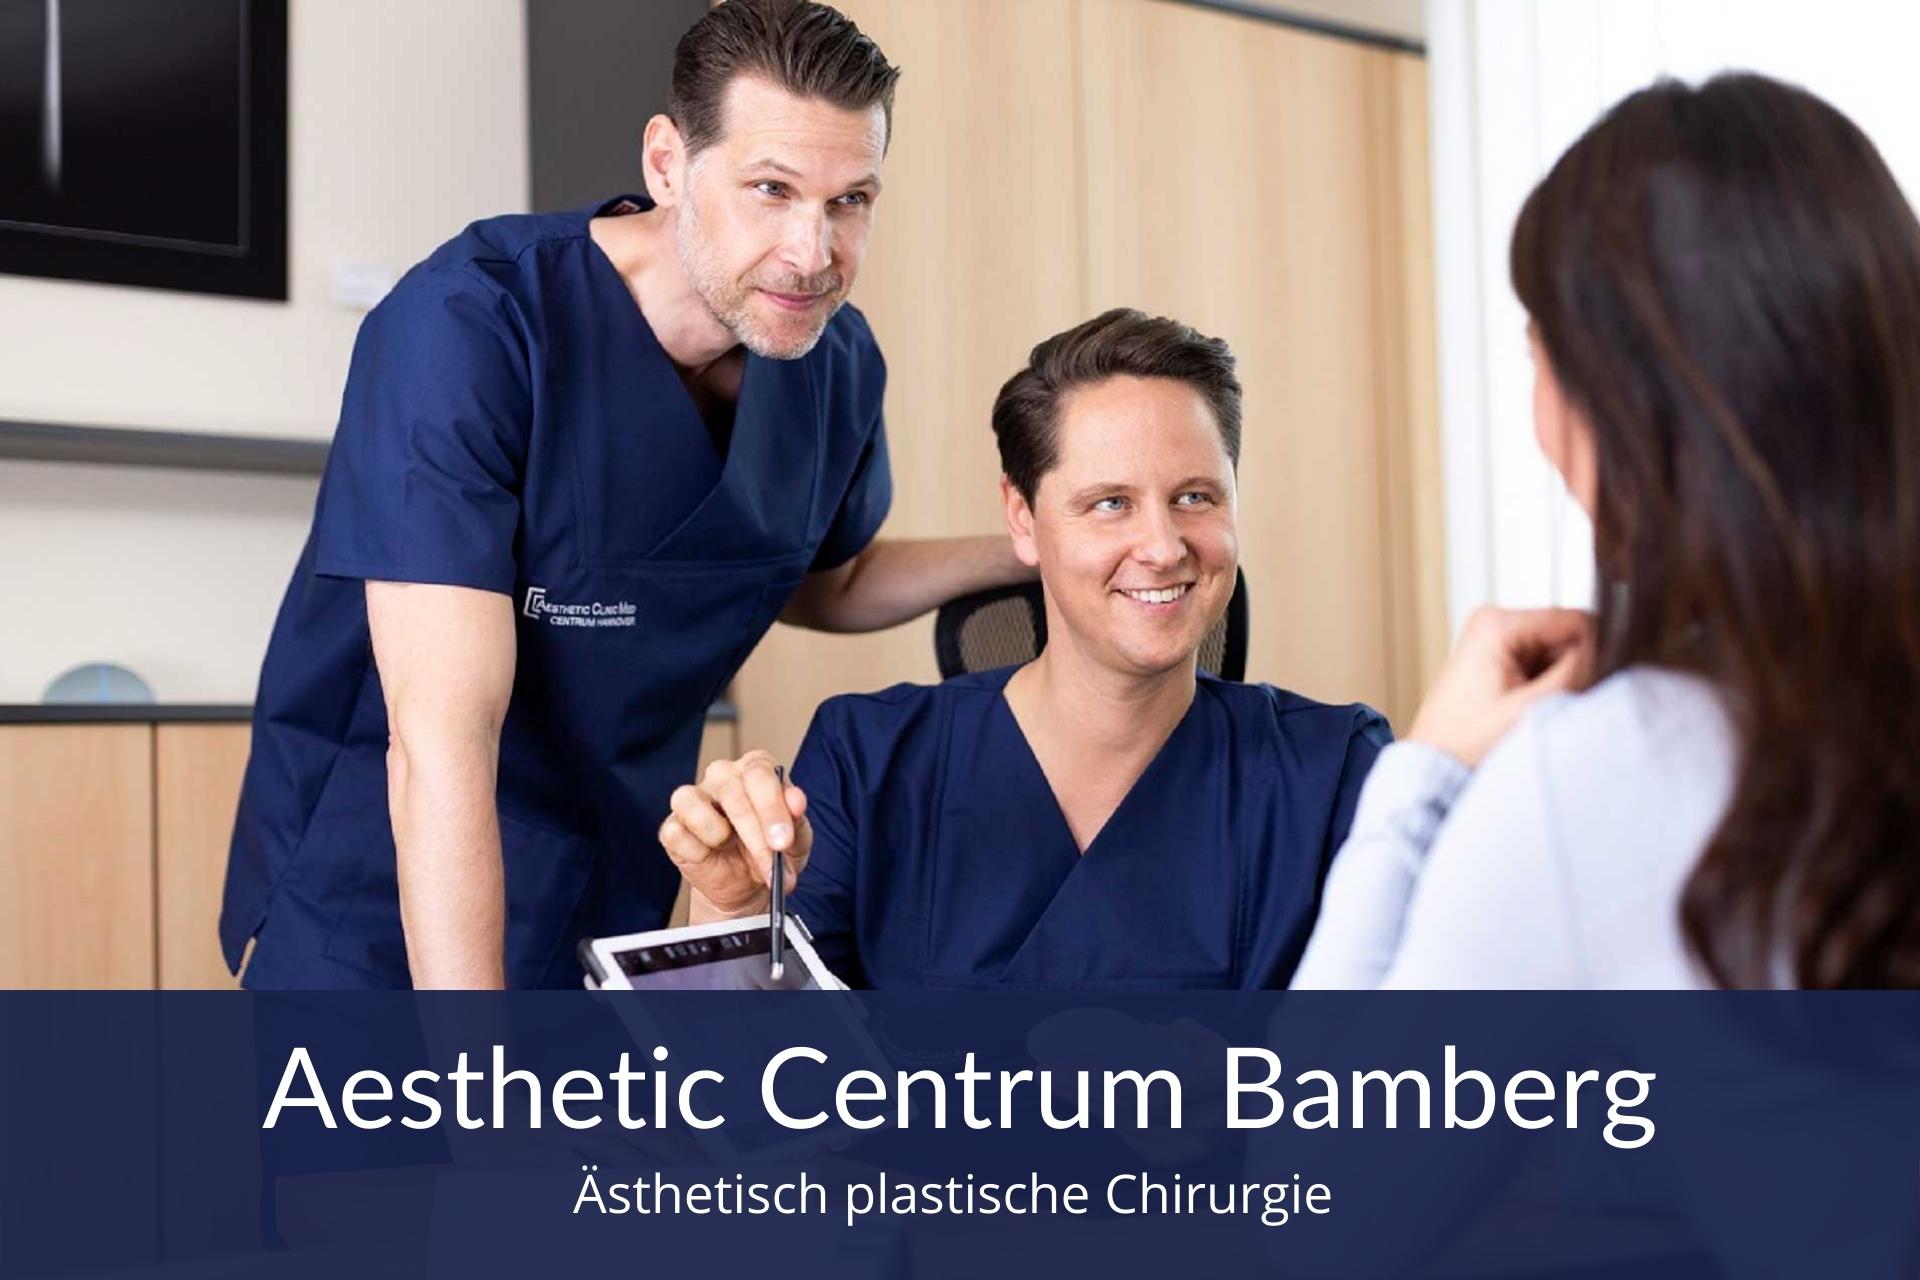 ästhetisch-plastische-chirurgie-bamberg-aesthetic-centrum